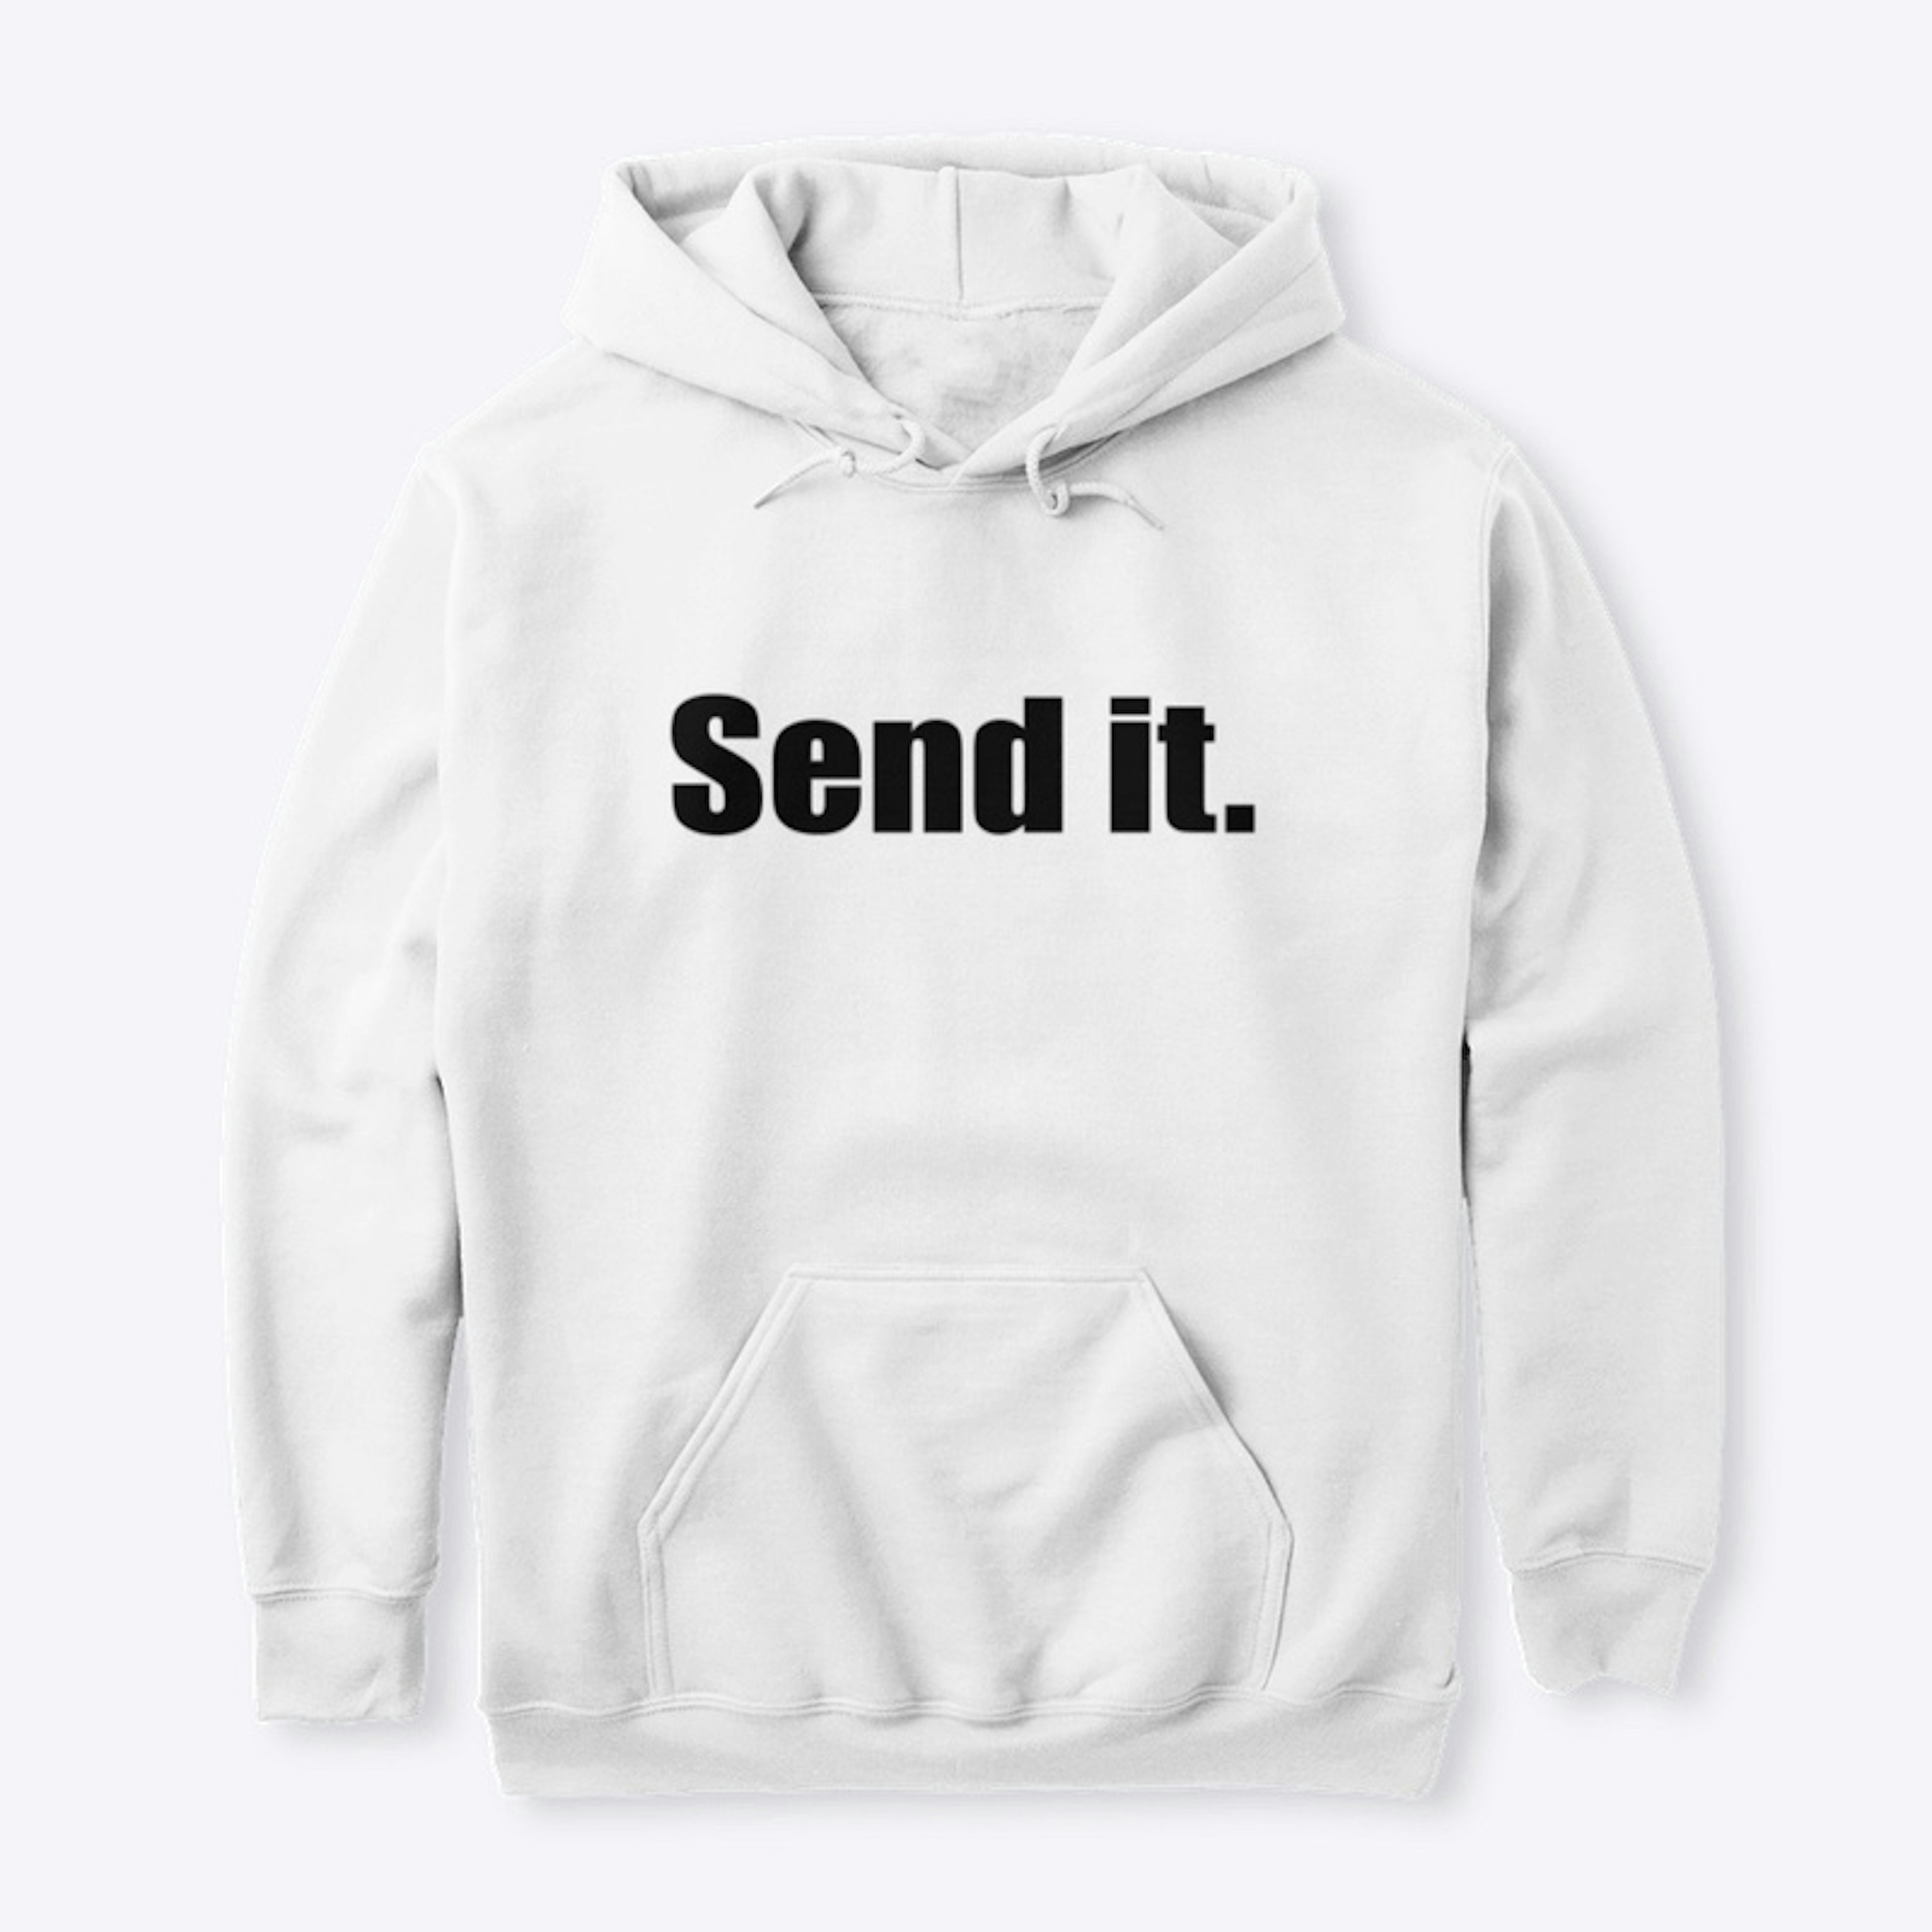 Send it - Light